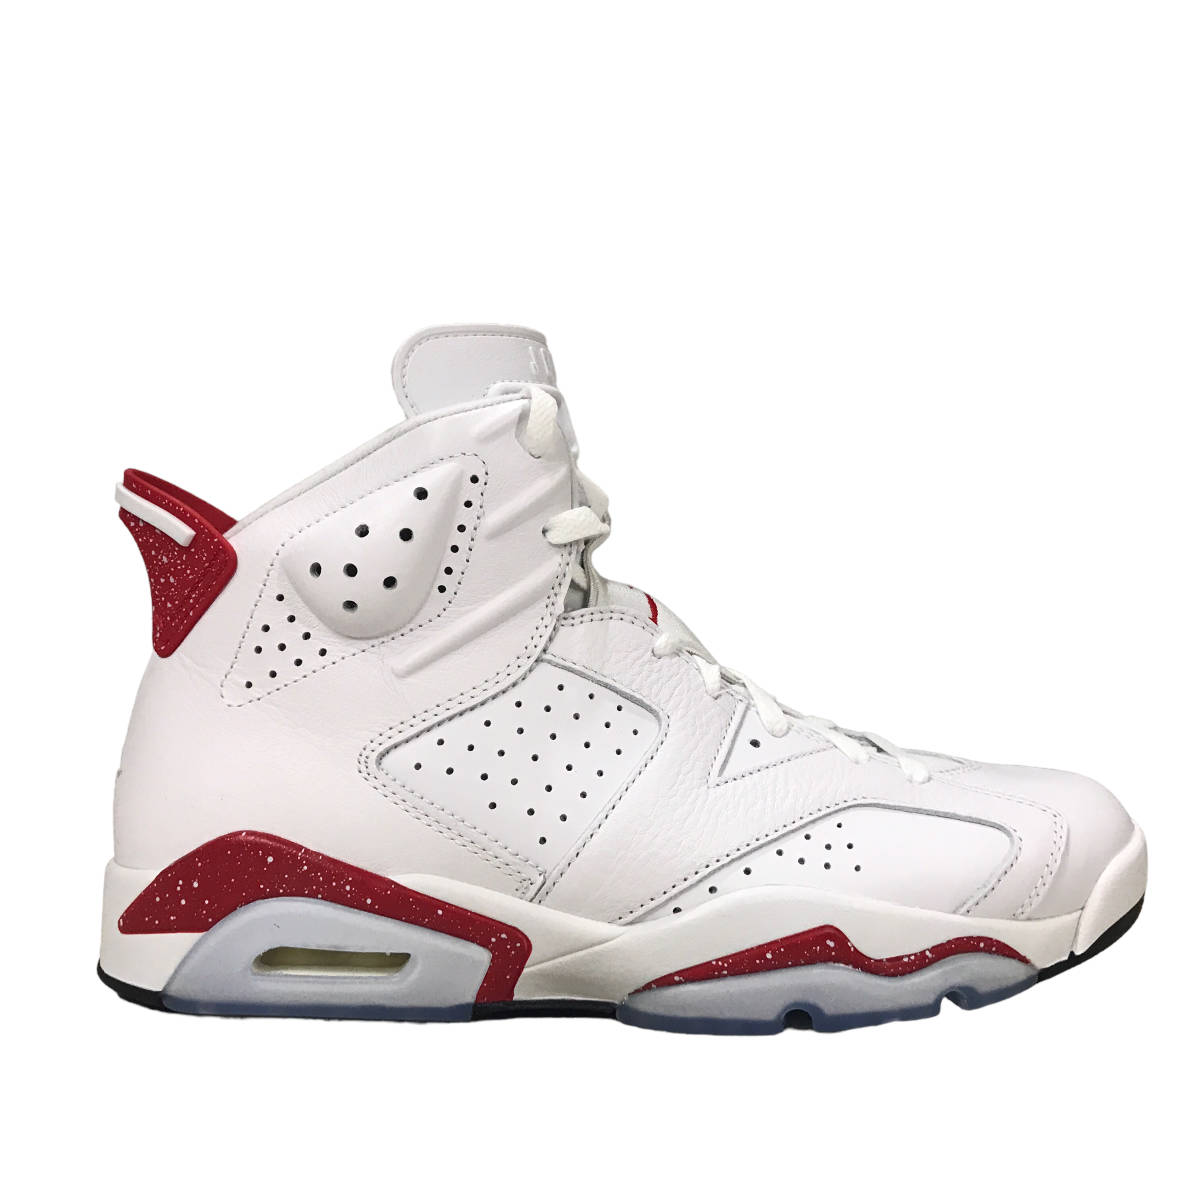 Nike Air Jordan 6 White and University Red Oreoナイキ エアジョーダン 6 CT8529-162 27.0cm 店舗受取可